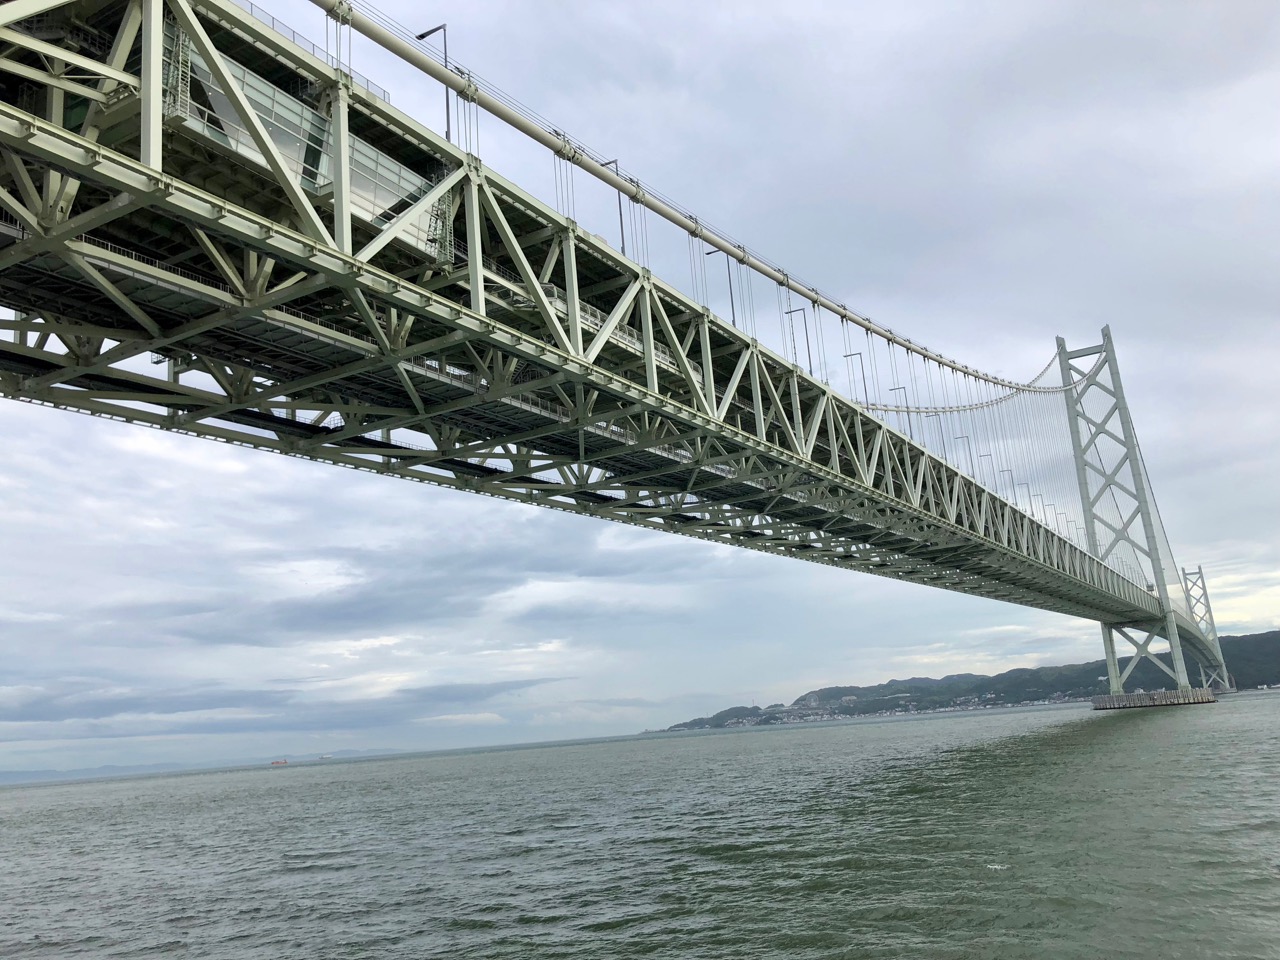  Akashi Kaikyo Bridge, the longest suspension bridge in the world